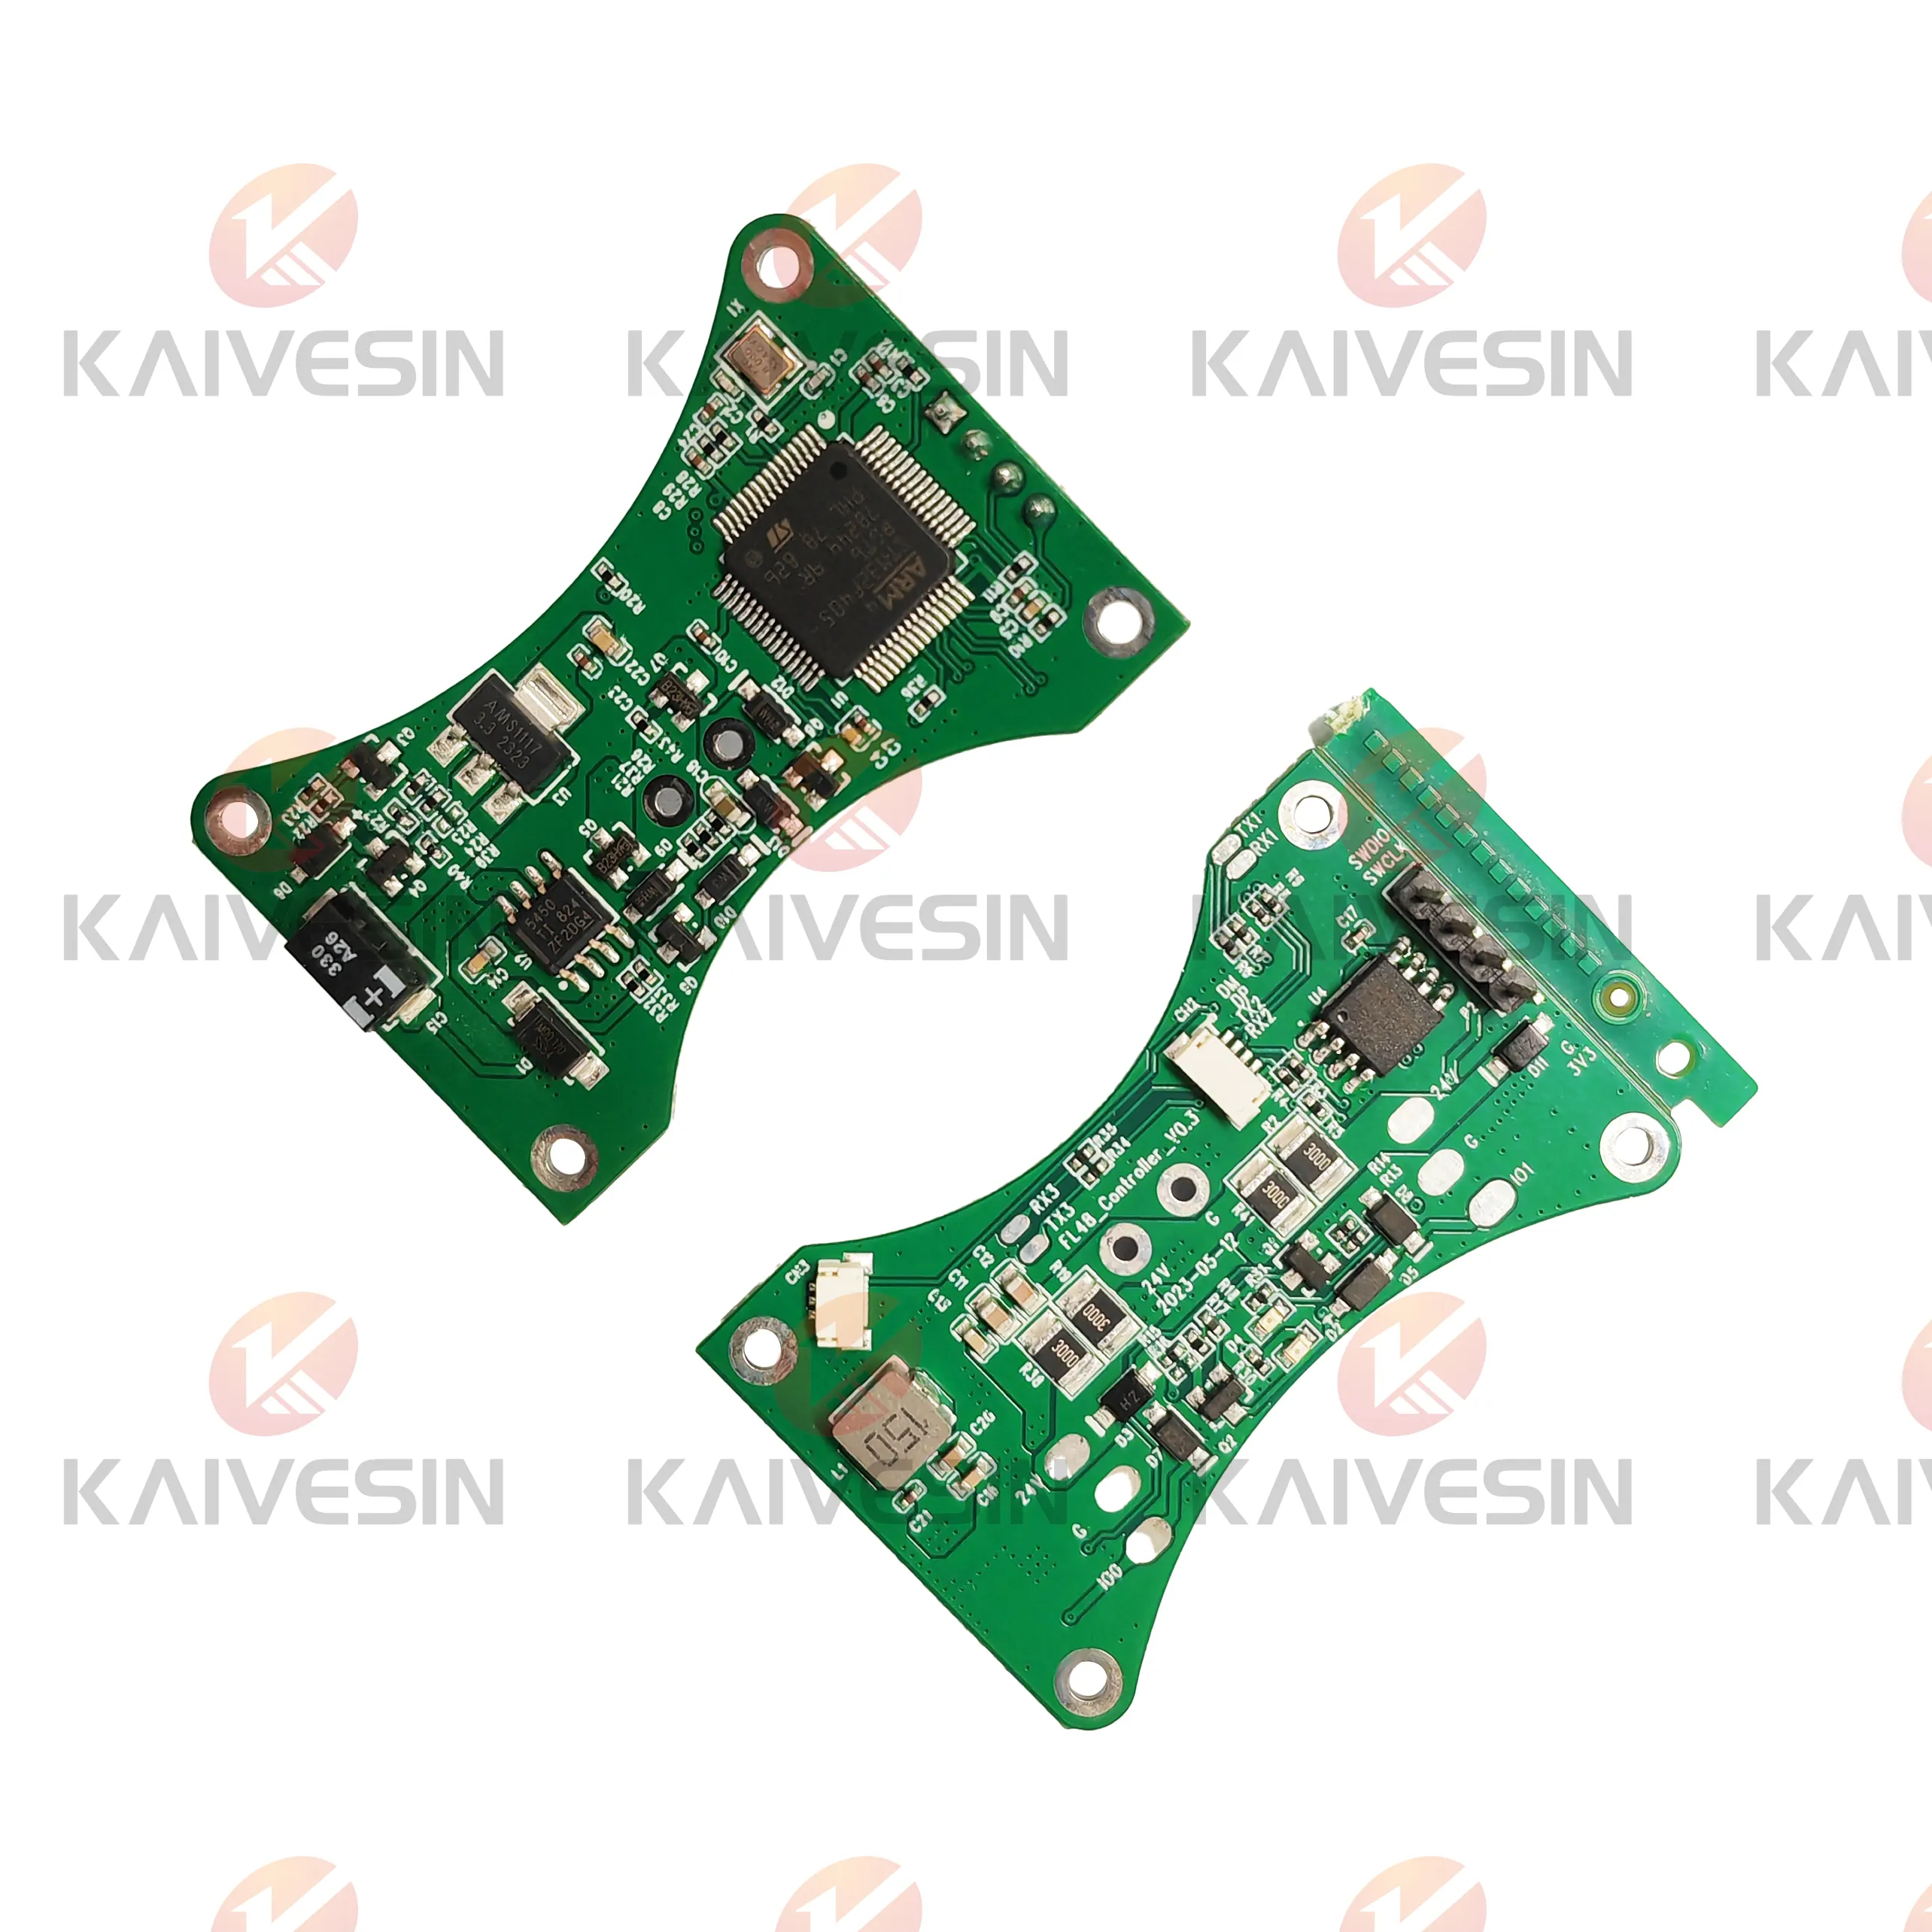 Kevis Oem Air Cooler Amplificador Android Linux Os Pc Board Placa base Otro Pcb & Pcba Copy-Service Circuit Proveedor